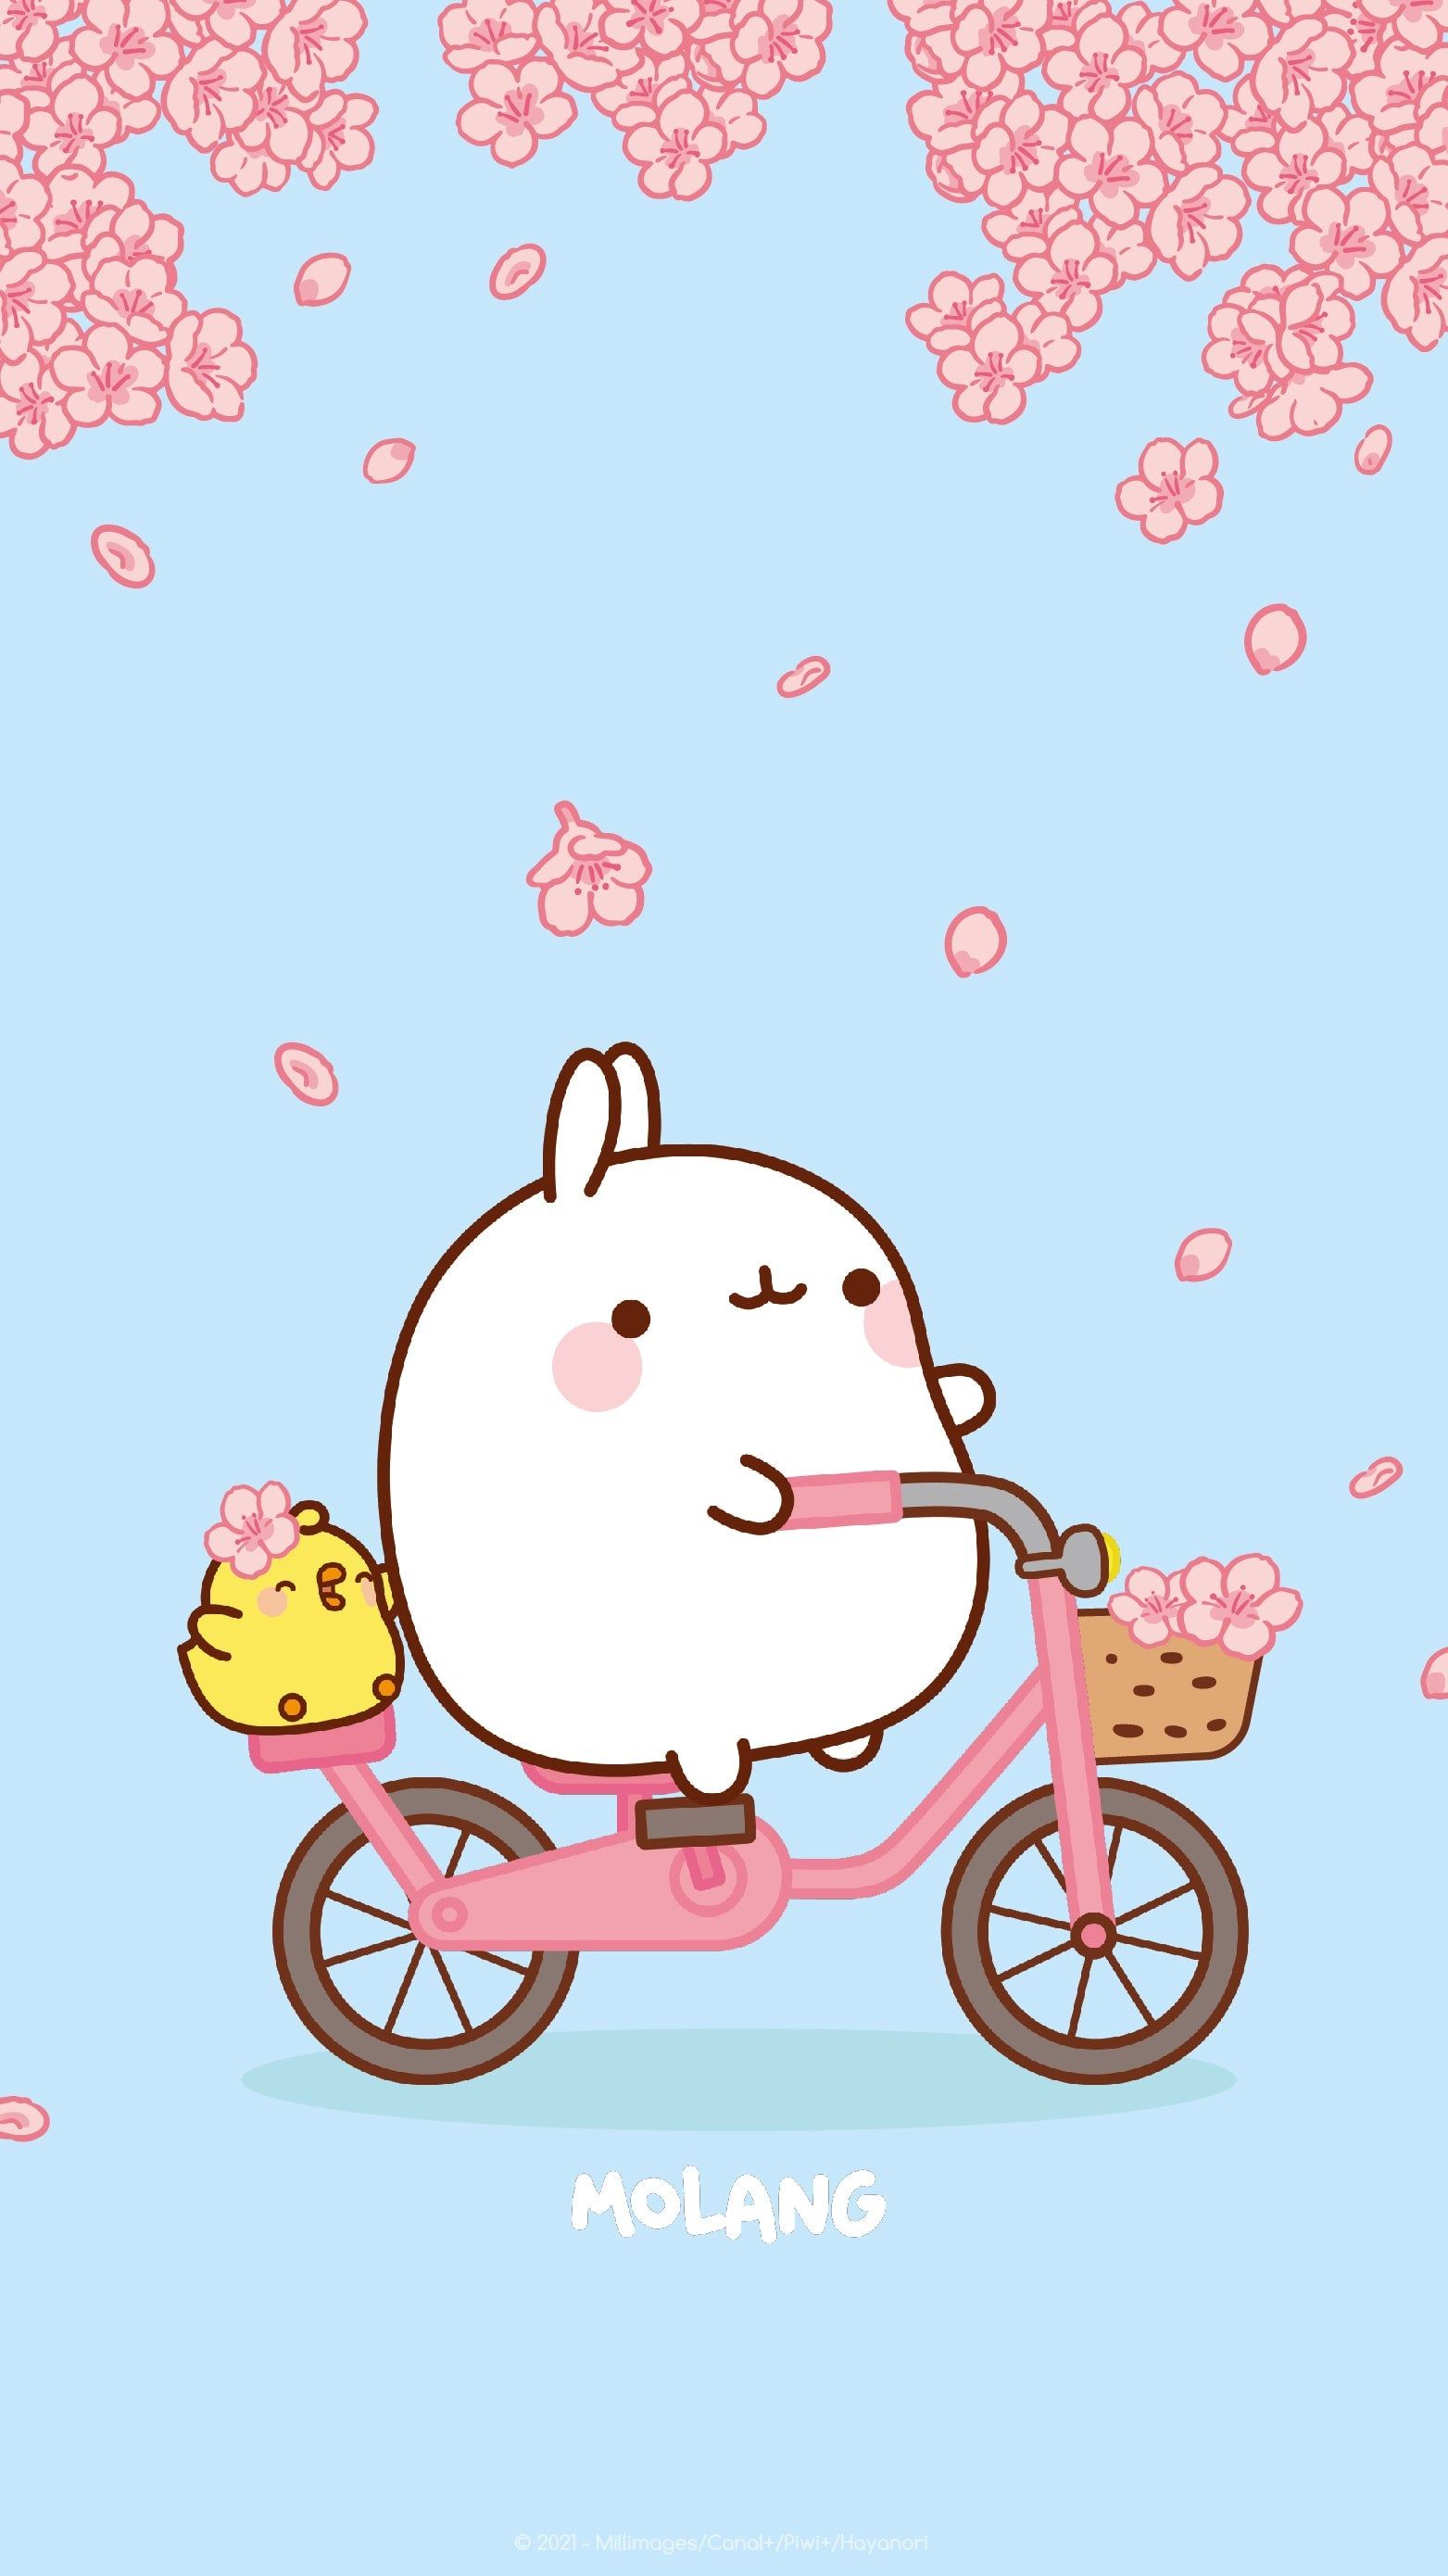 A cute cartoon bunny riding on his bike - Molang